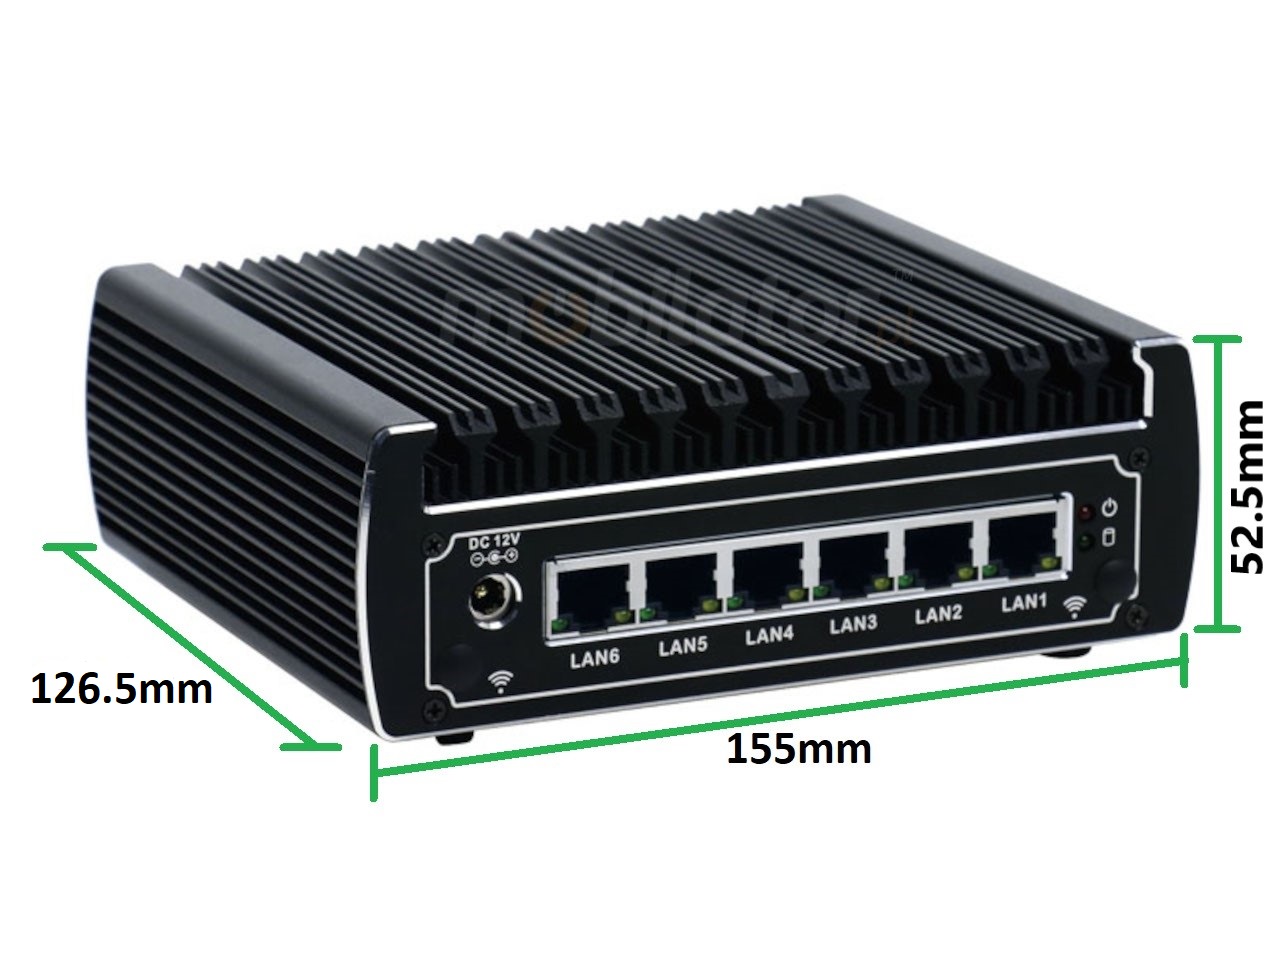   IBOX N133  v.13, wymiary HDD DDR4 , przemysowy, may, szybki, niezawodny, fanless, industrial, small, LAN, INTEL i3